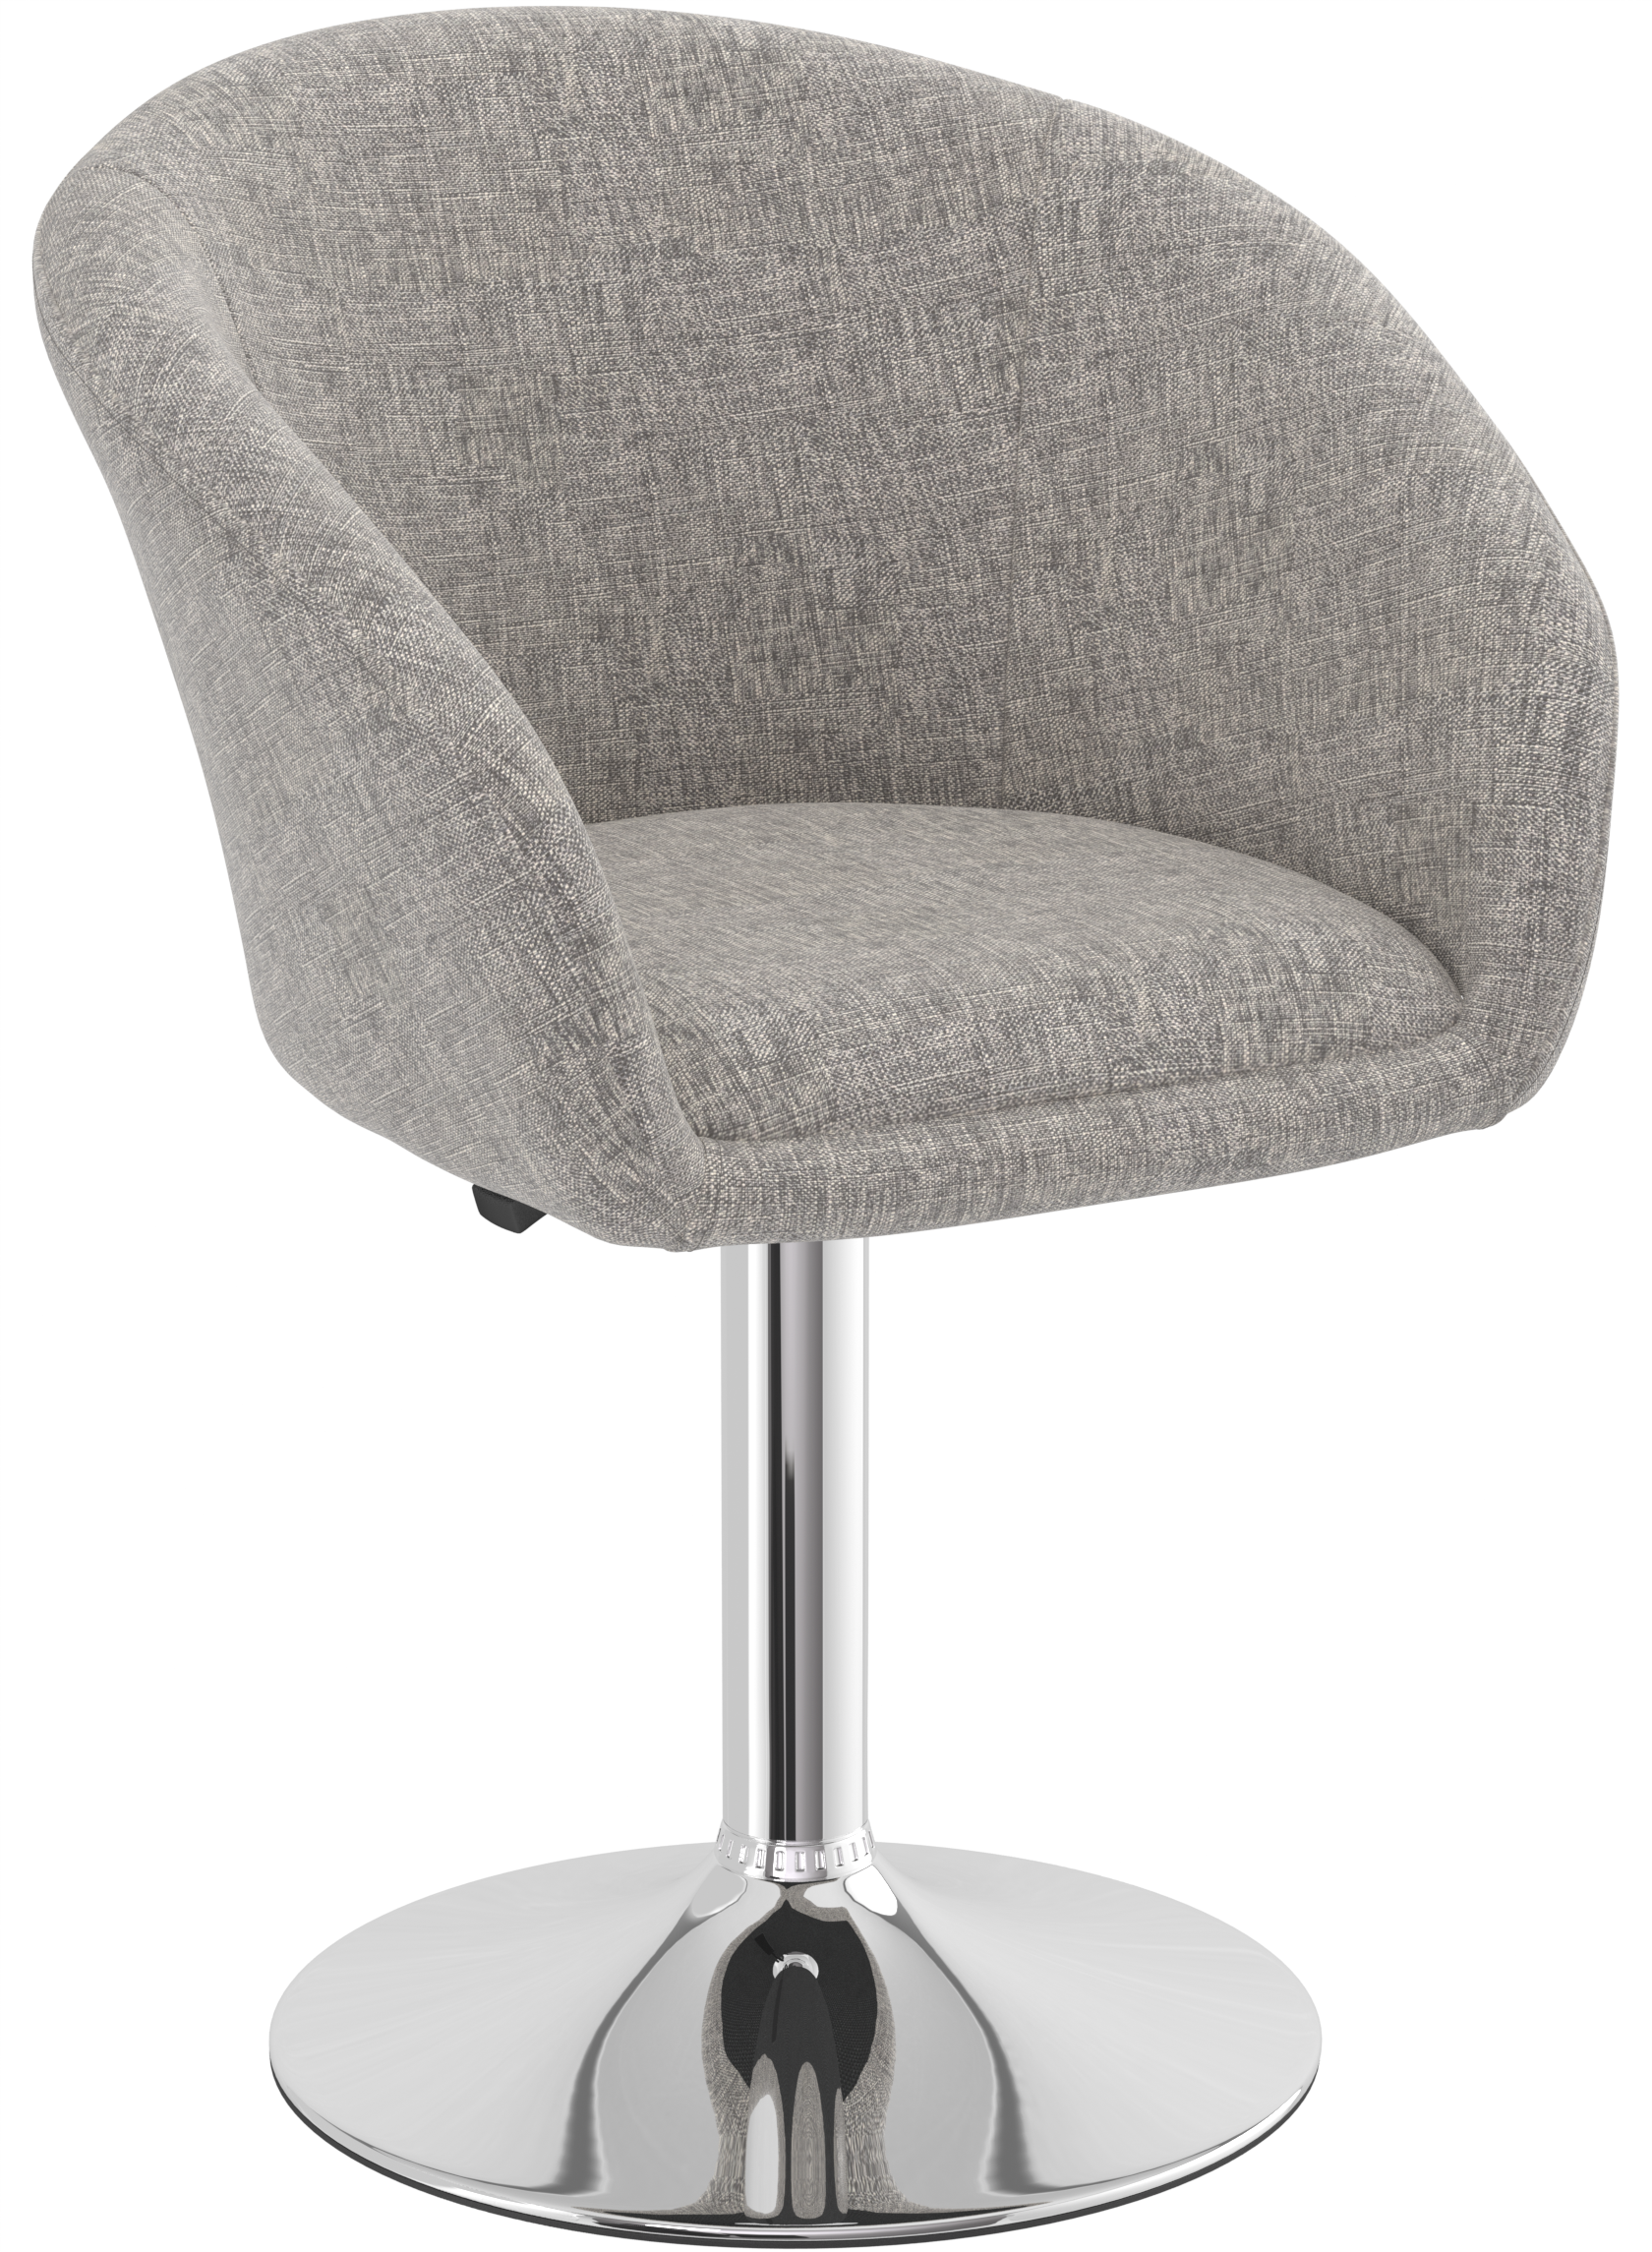 Sofia Chair Grey Fabric